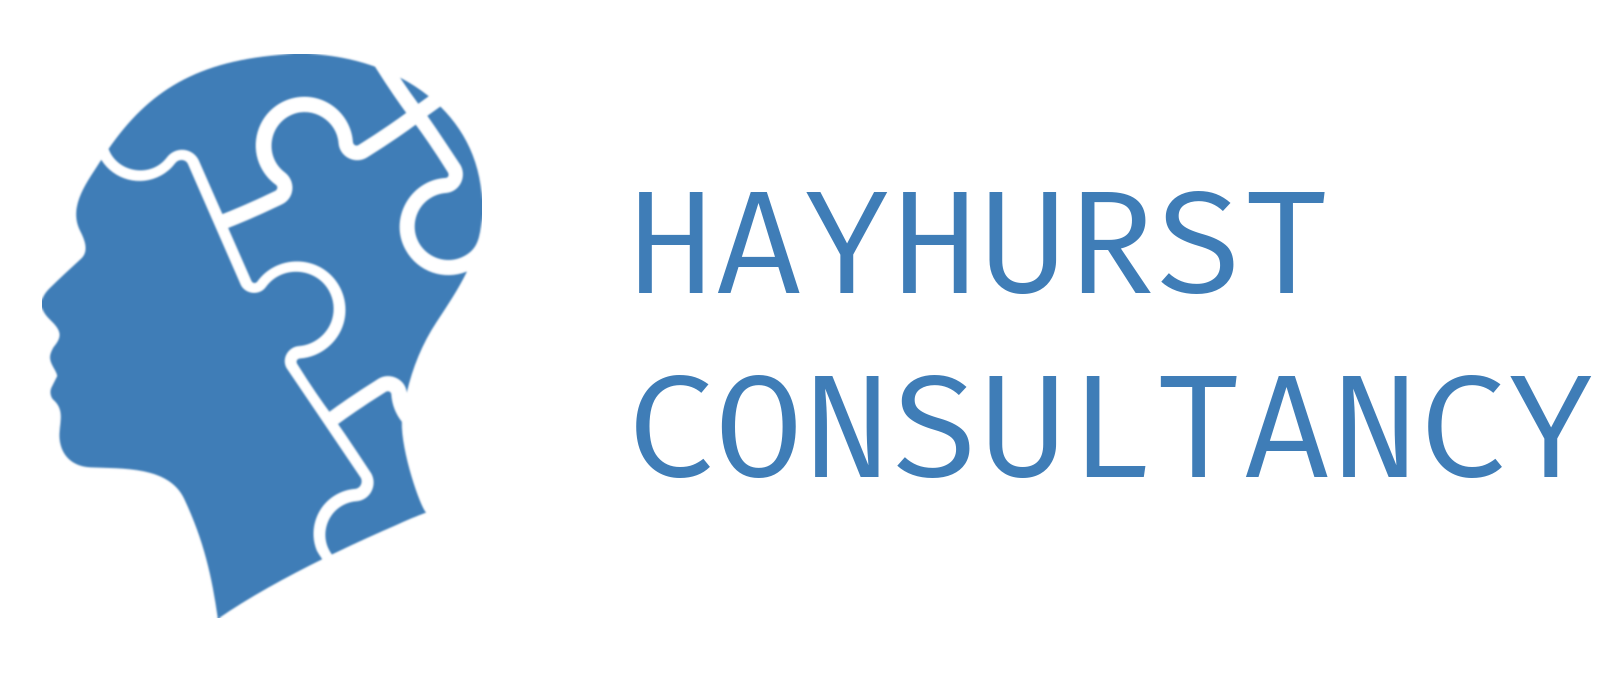 Hayhurst Consultancy